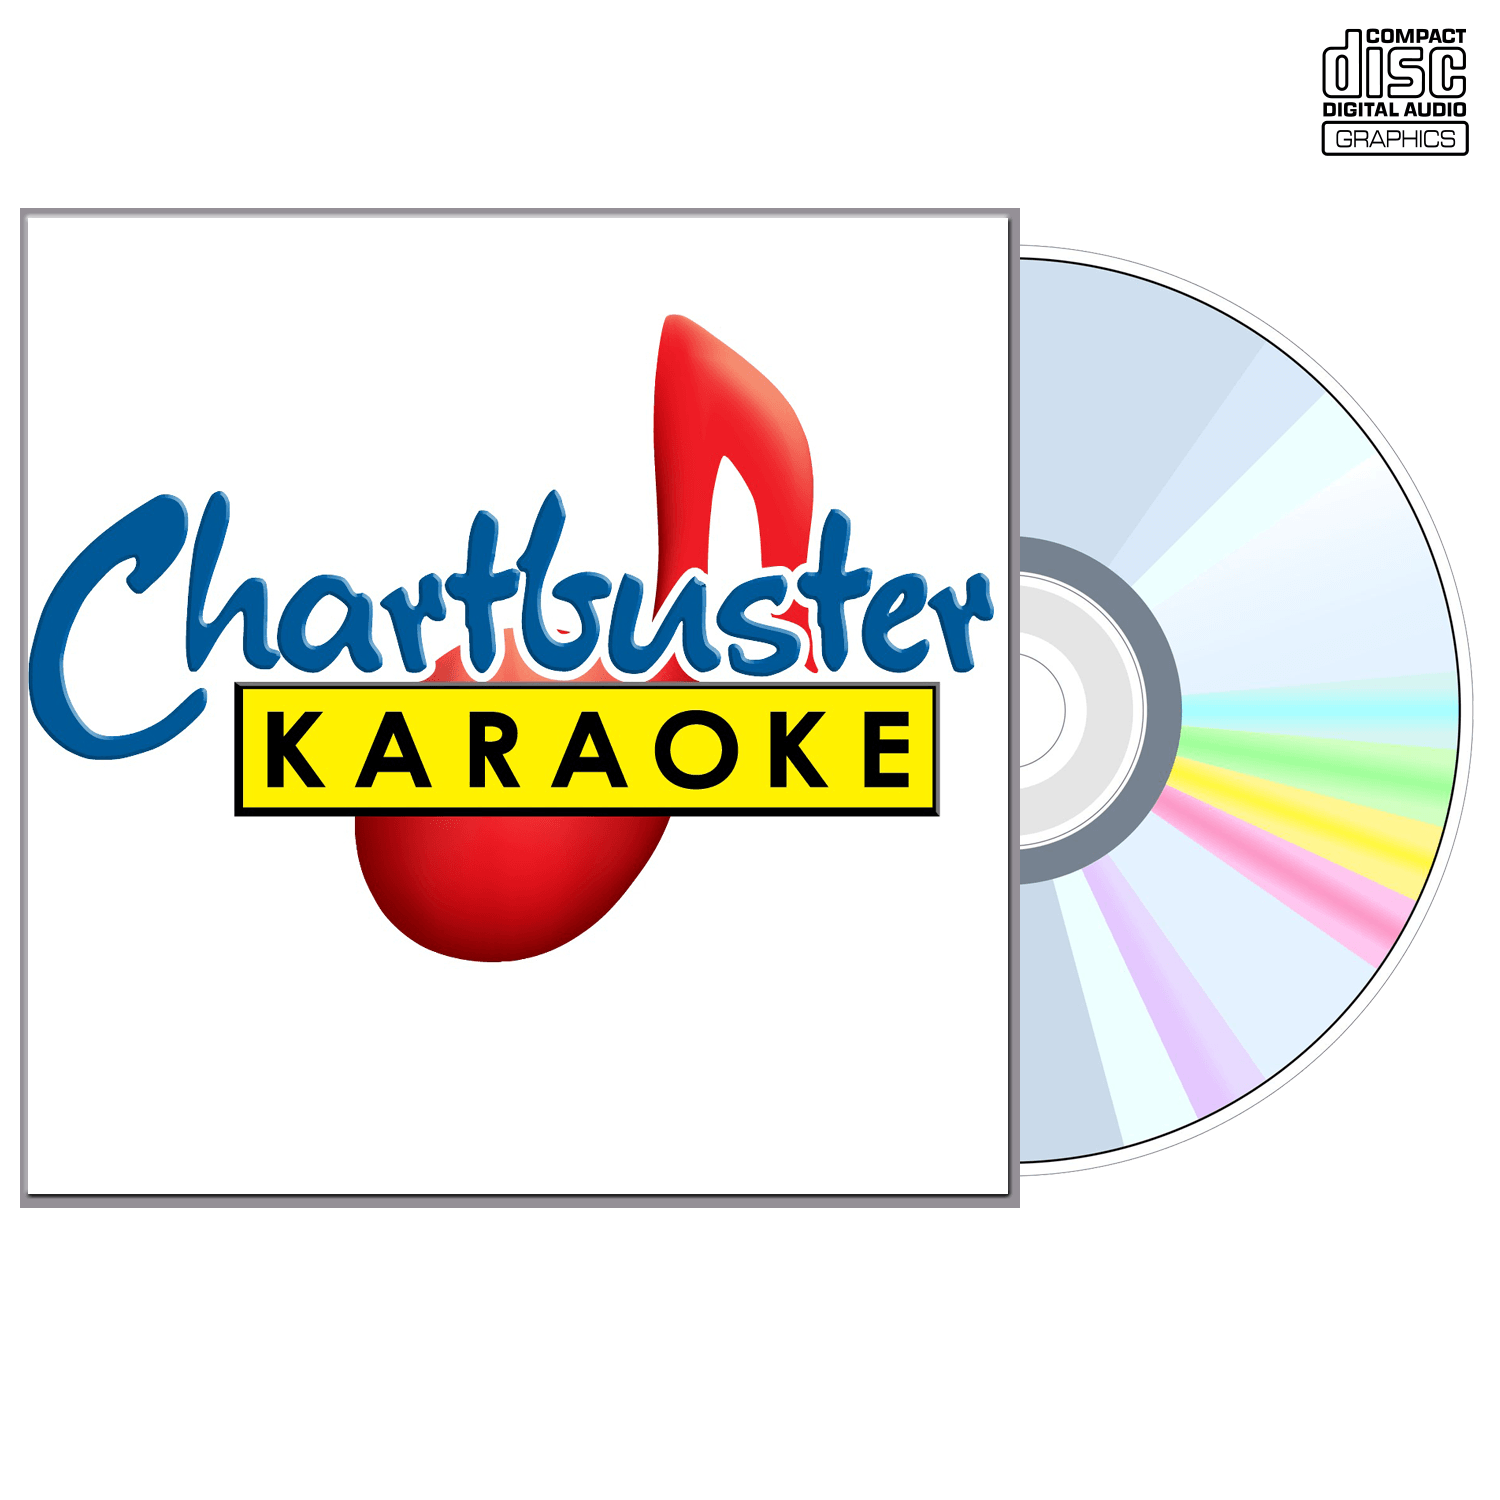 Brian Mcknight - CD+G - Chartbuster Karaoke - Karaoke Home Entertainment